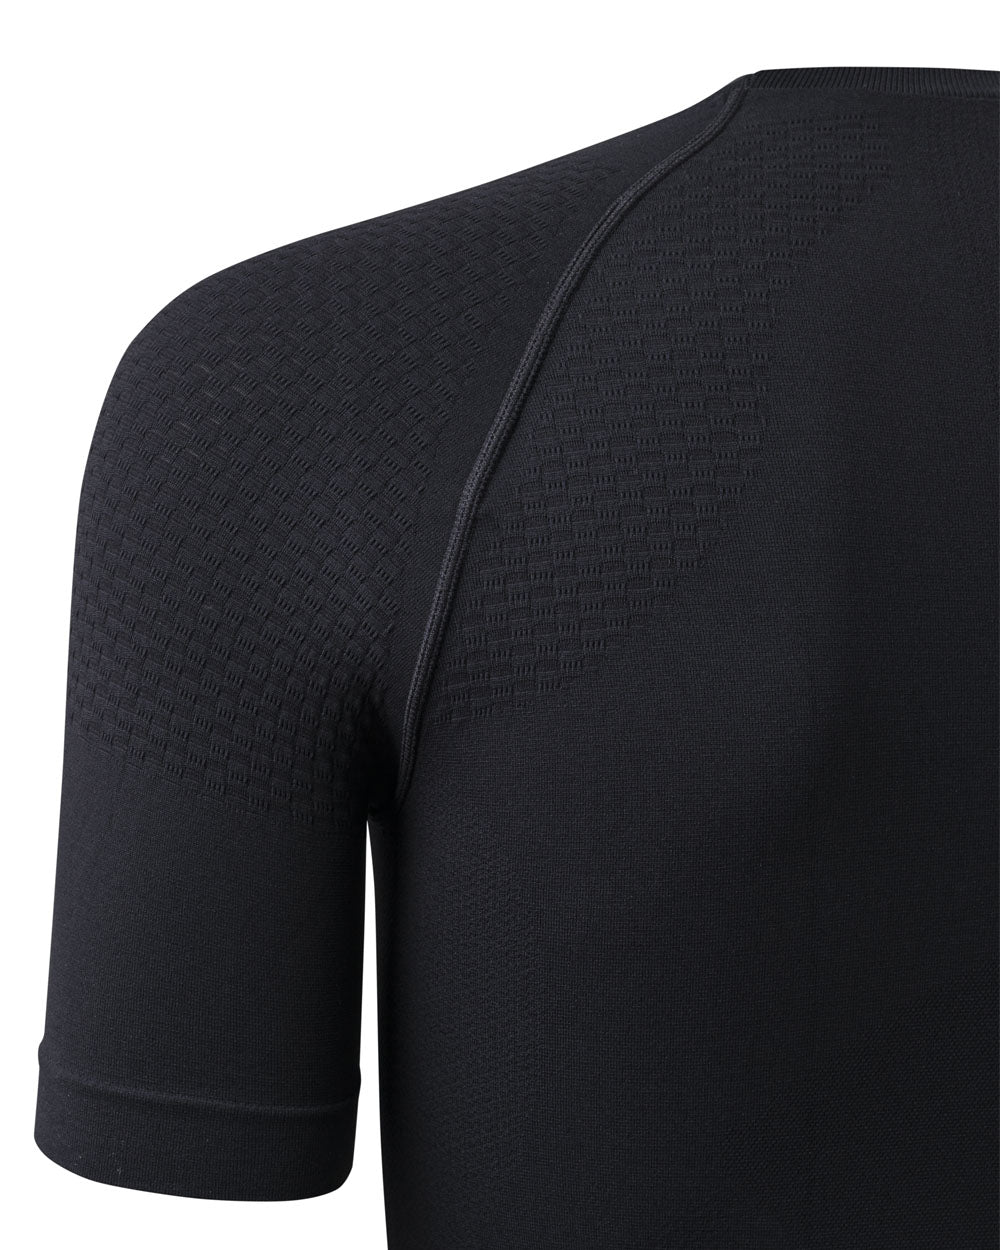 T-shirt FIR man short sleeves - Black - Medical Device triloxy